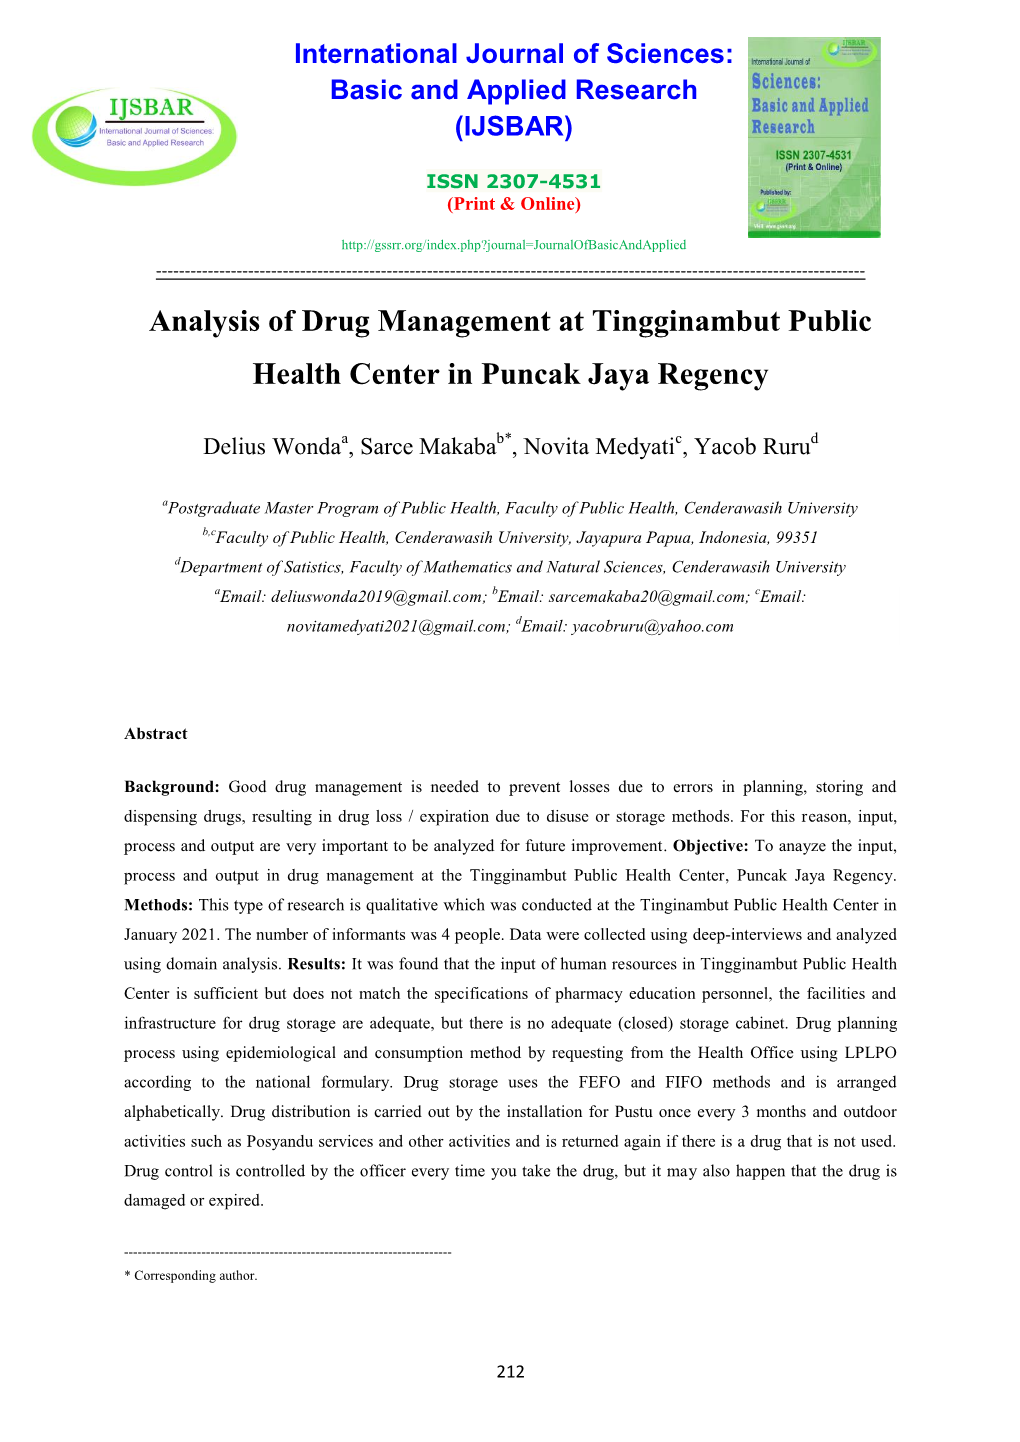 Analysis of Drug Management at Tingginambut Public Health Center in Puncak Jaya Regency